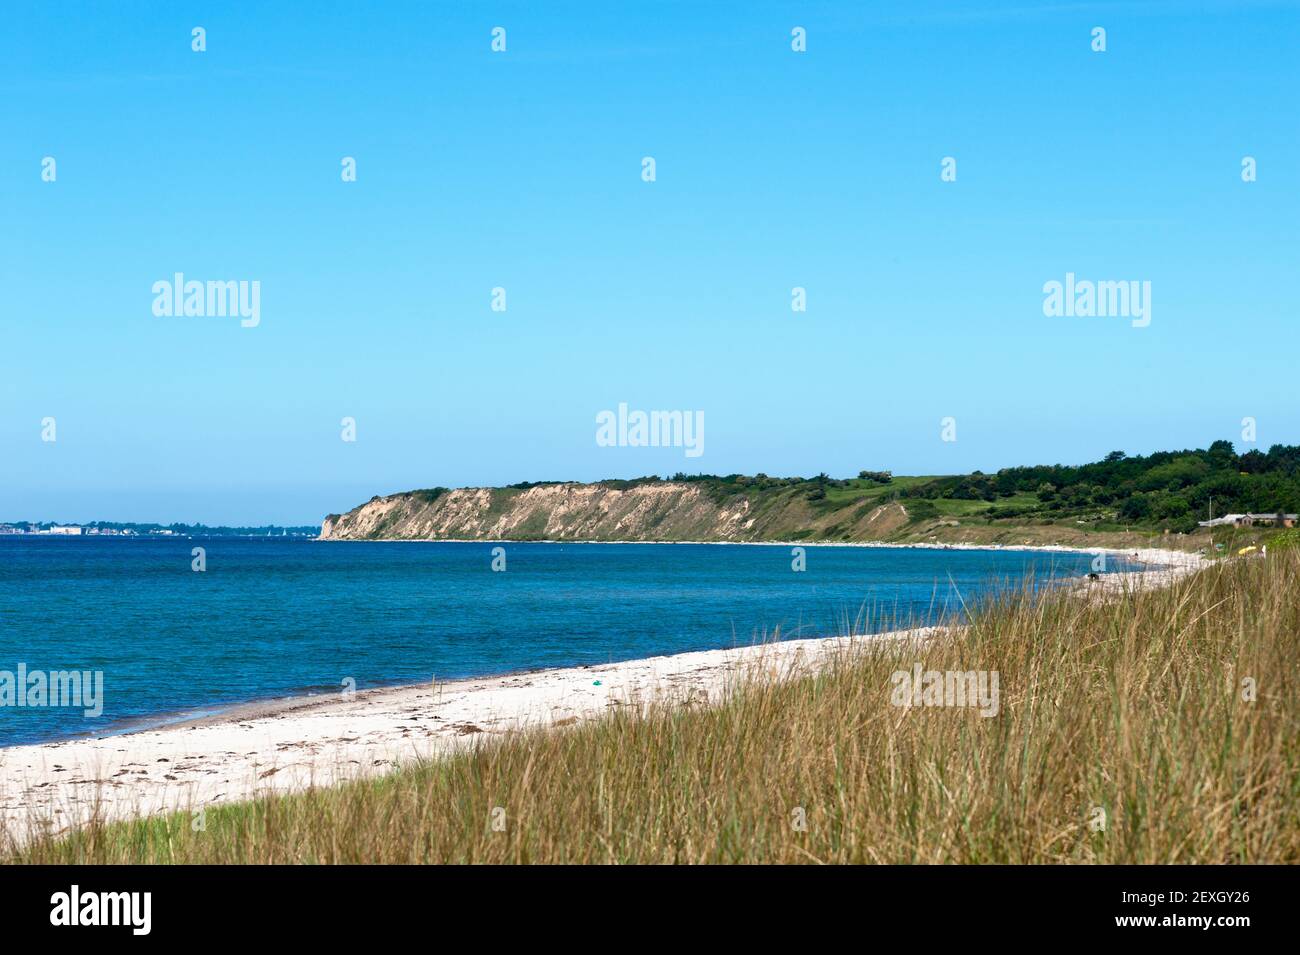 Empty beach on the island Langeland, Denmark, in s Stock Photo